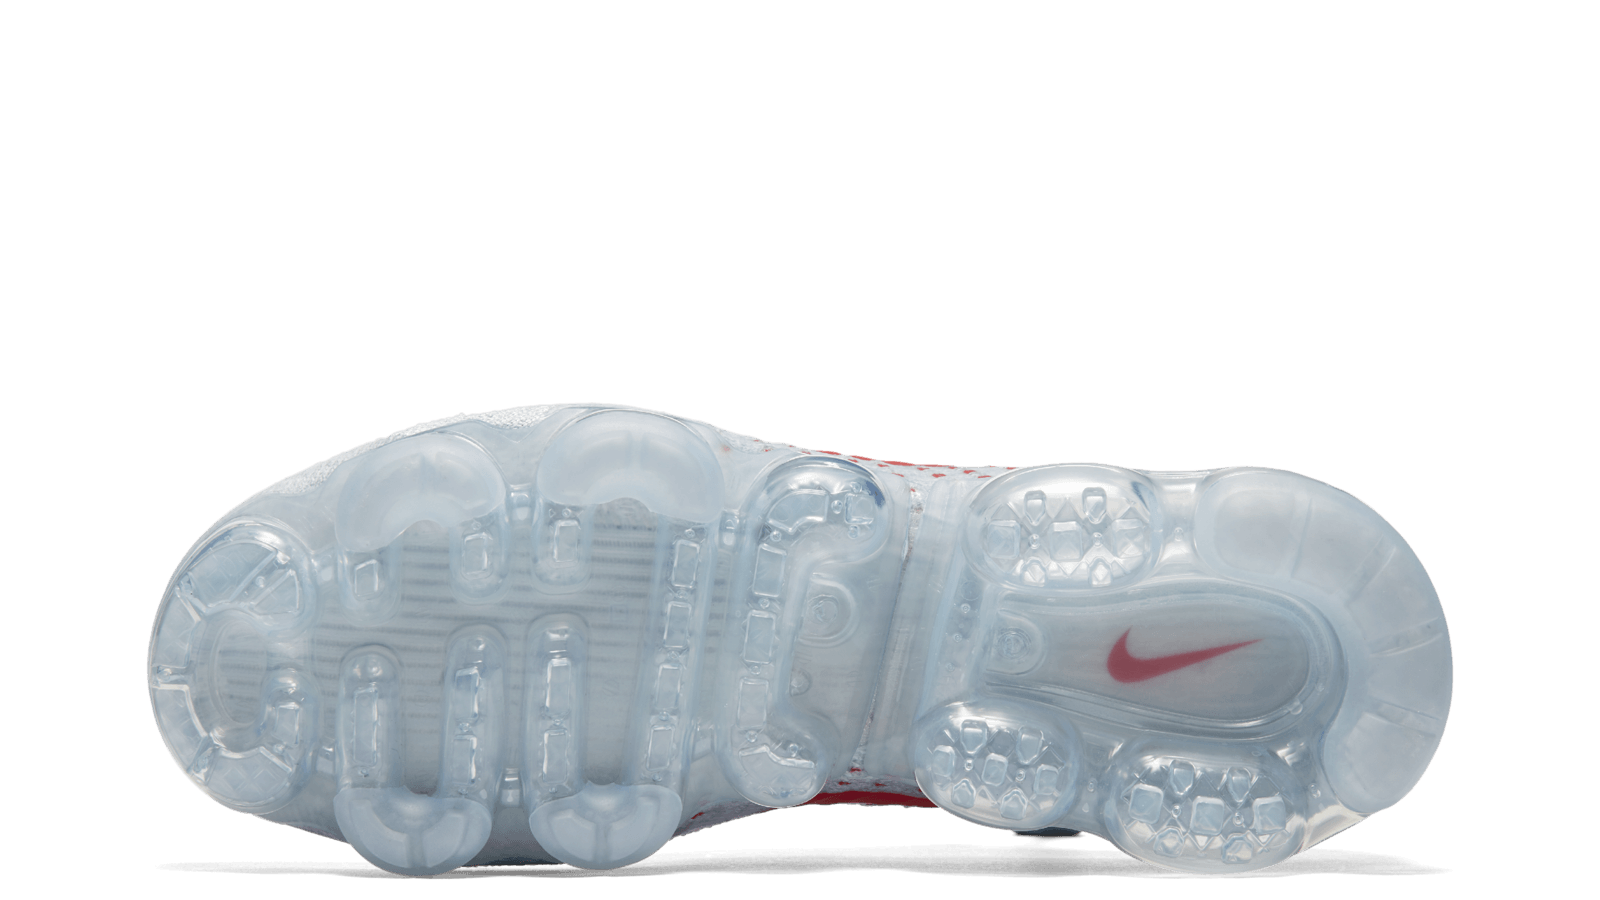 Nike Air VaporMax Reveals the Pinnacle of Air